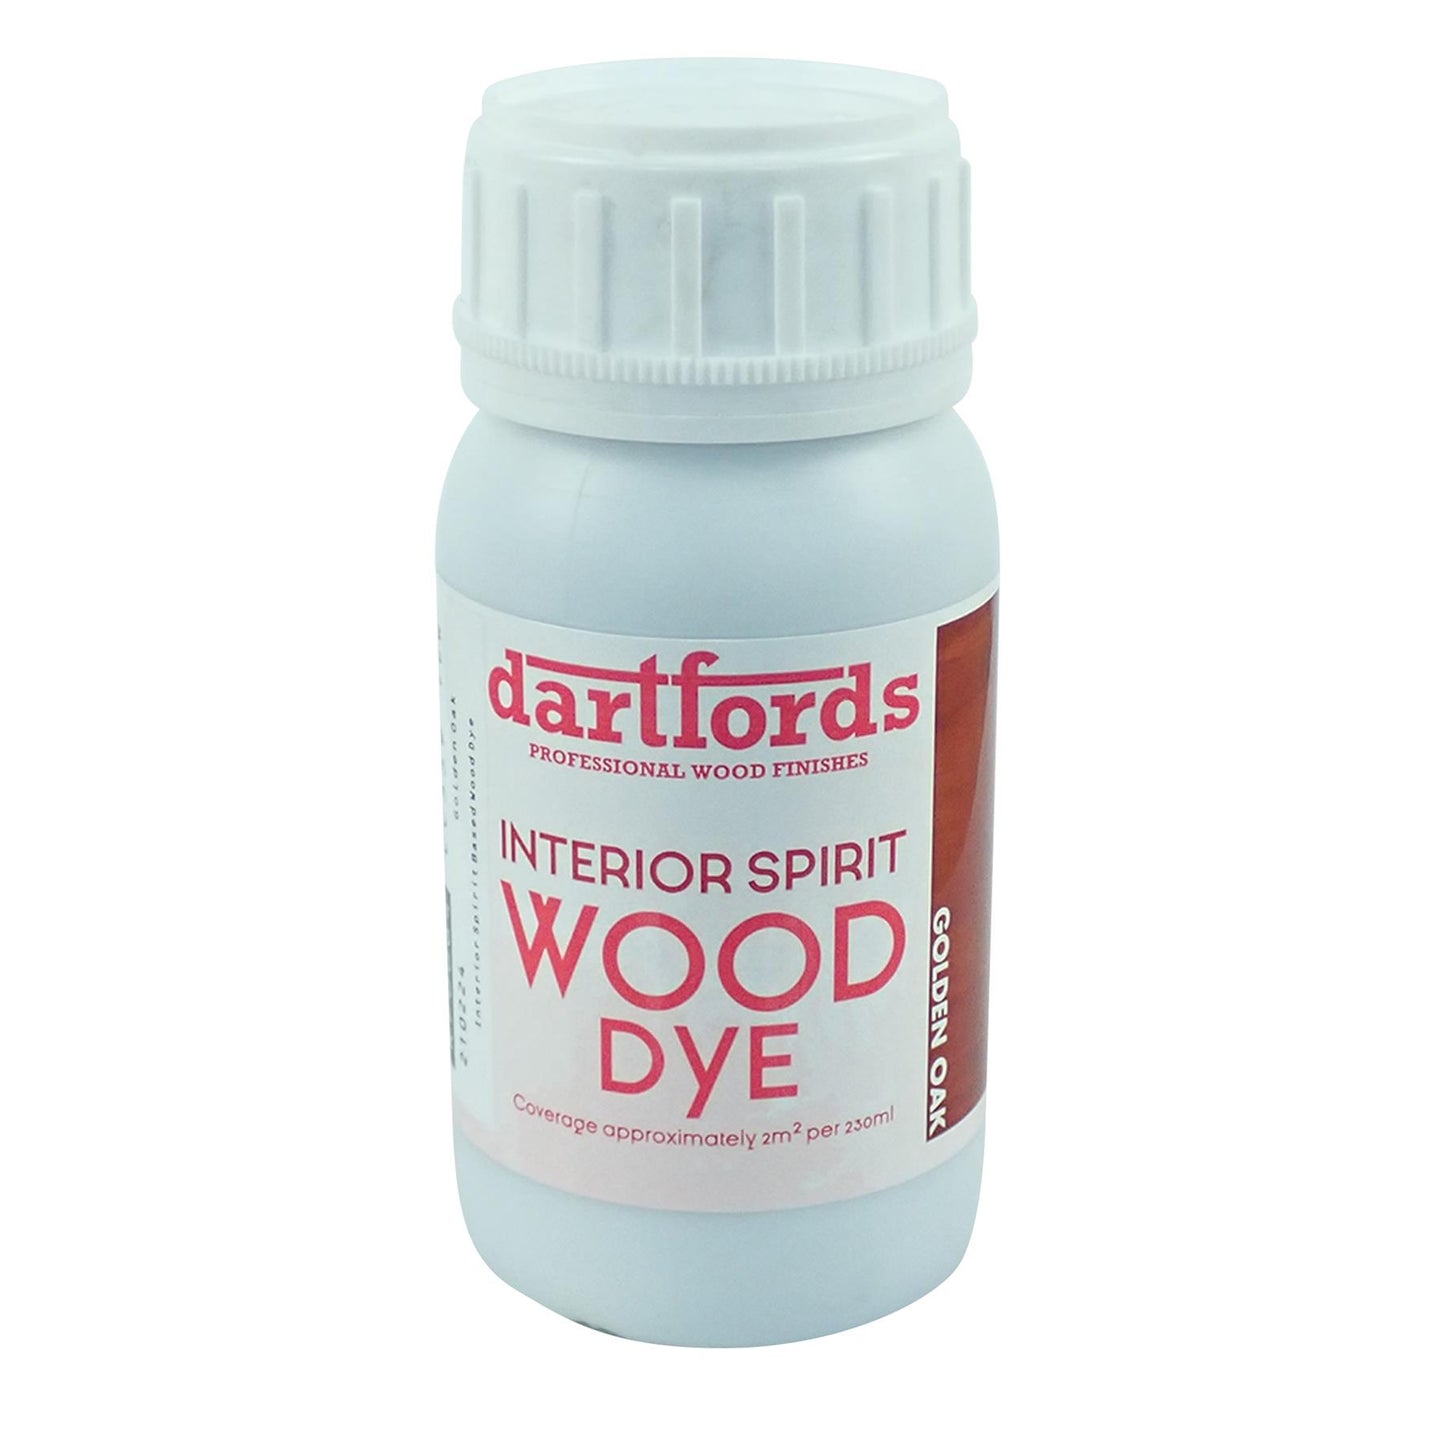 dartfords Golden Oak Interior Spirit Based Wood Dye - 230ml Tin